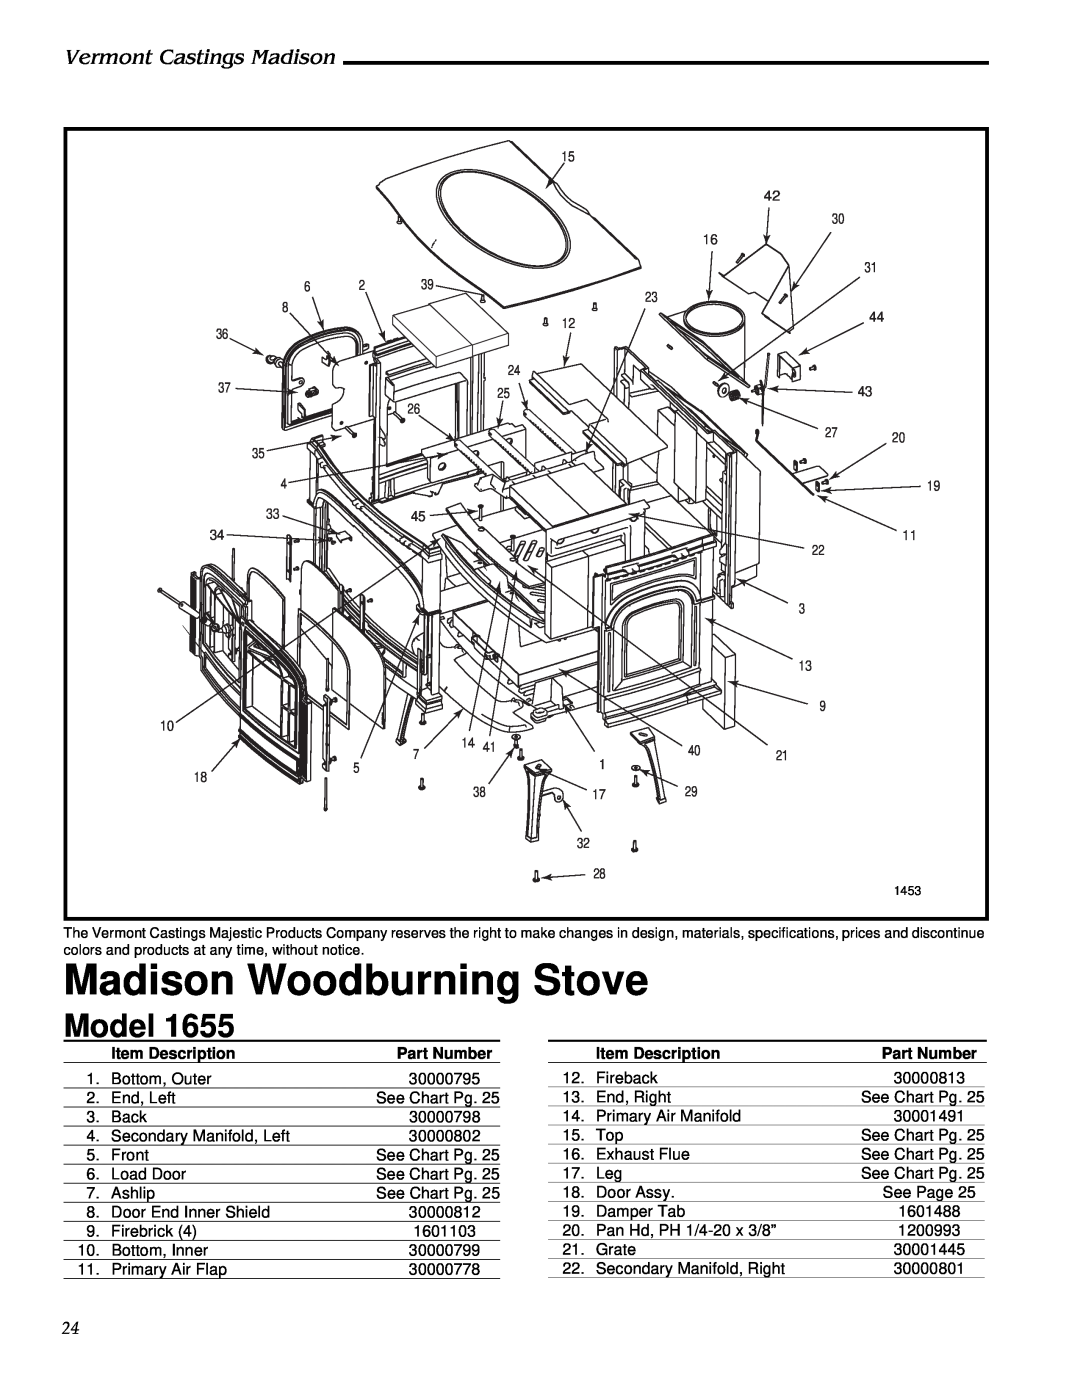 Vermont Casting 1655, 1656, 1657, 1658, 1659 Madison Woodburning Stove, Model, Vermont Castings Madison, Item Description 